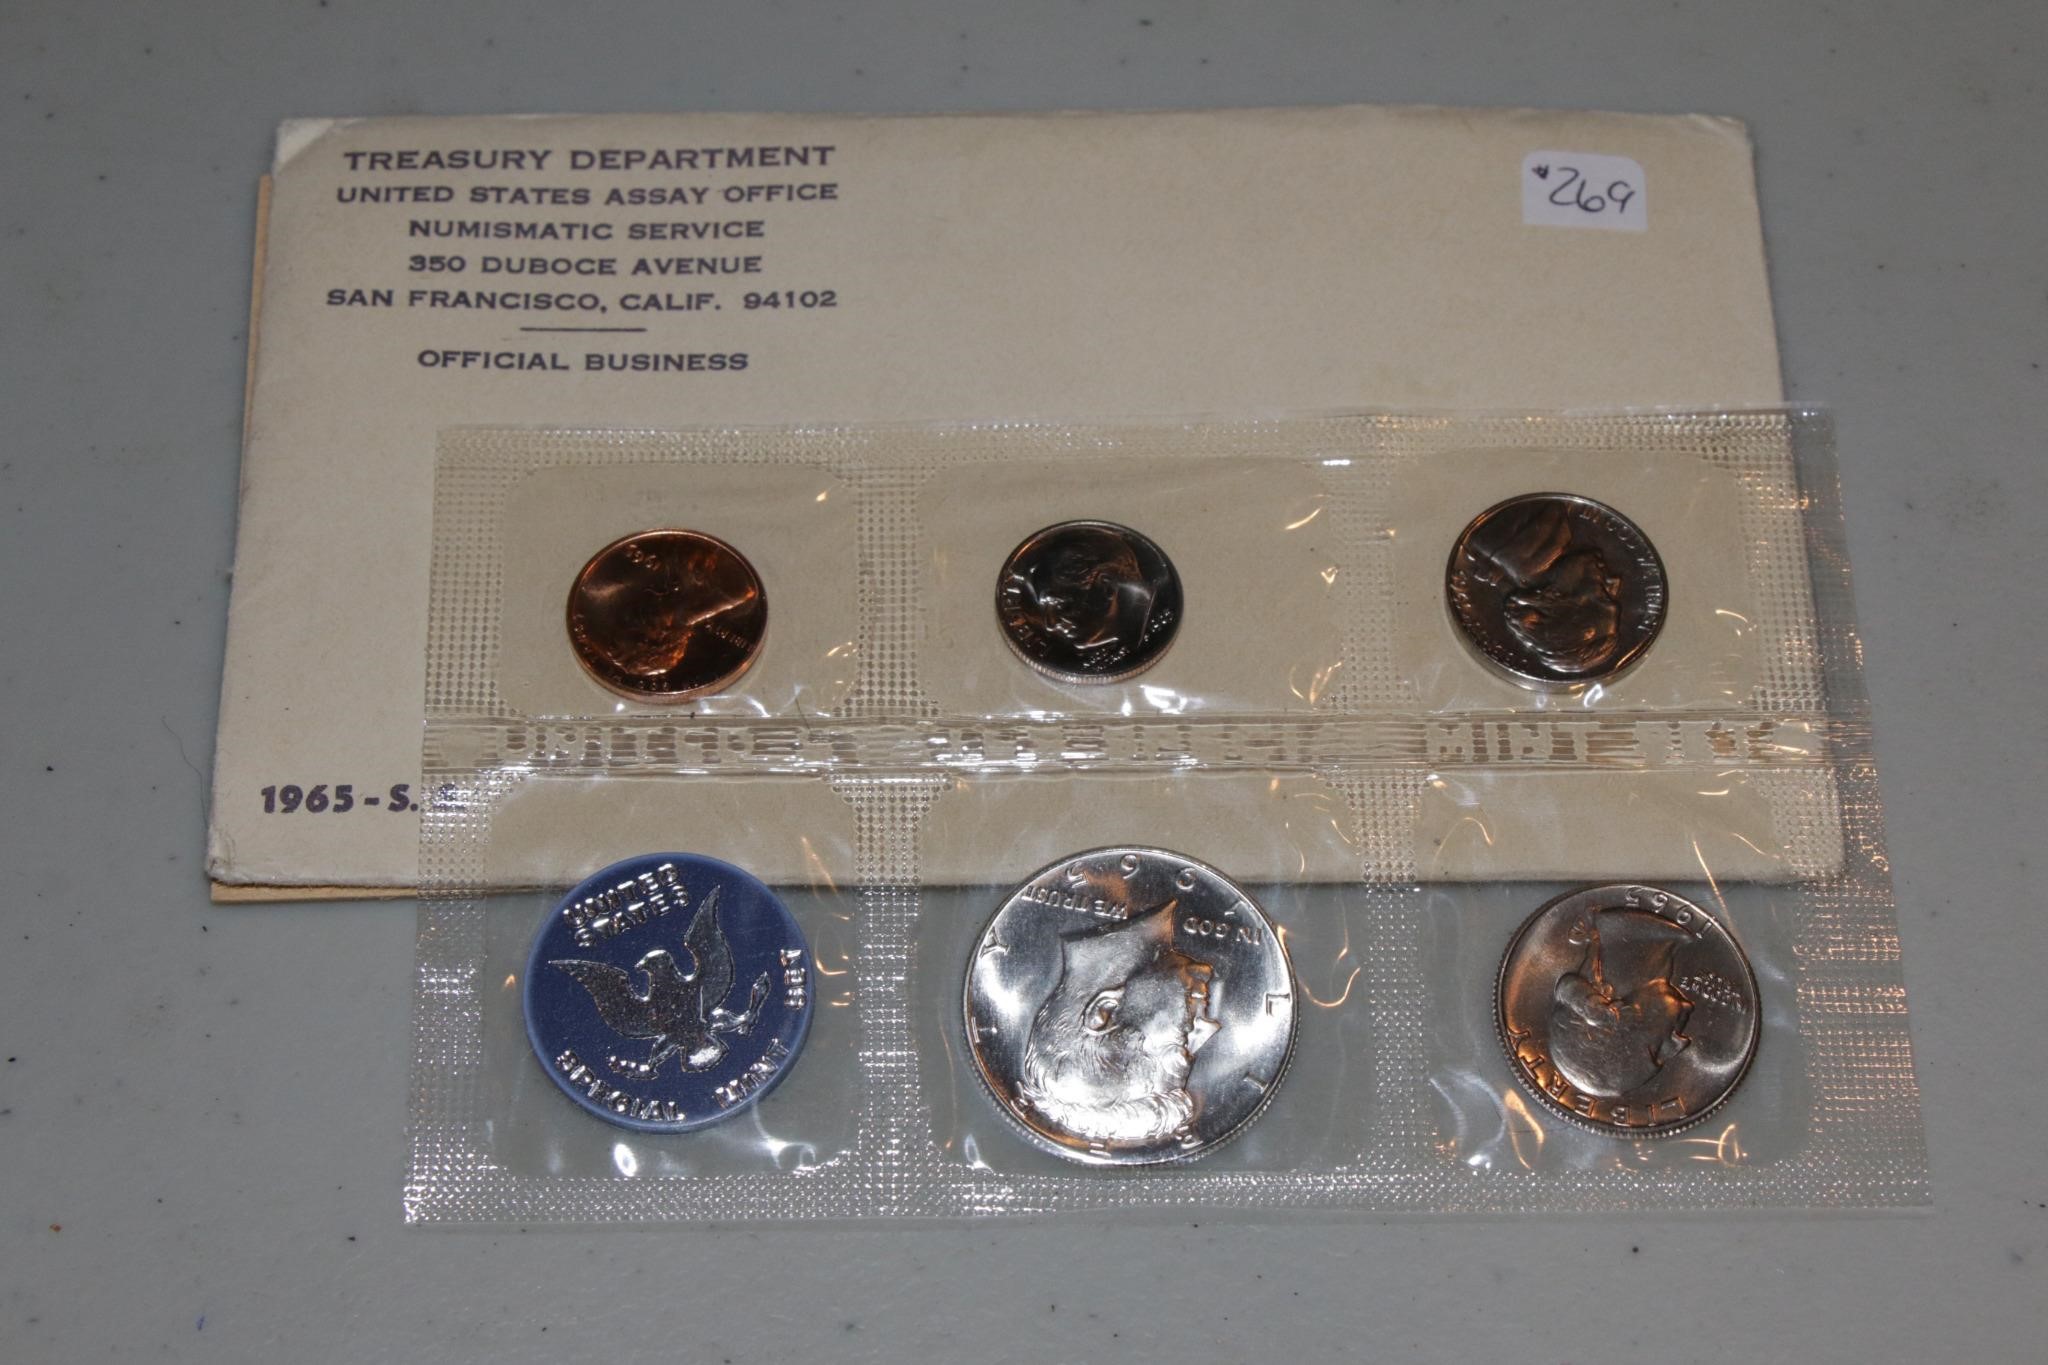 1965 US Special Mint set